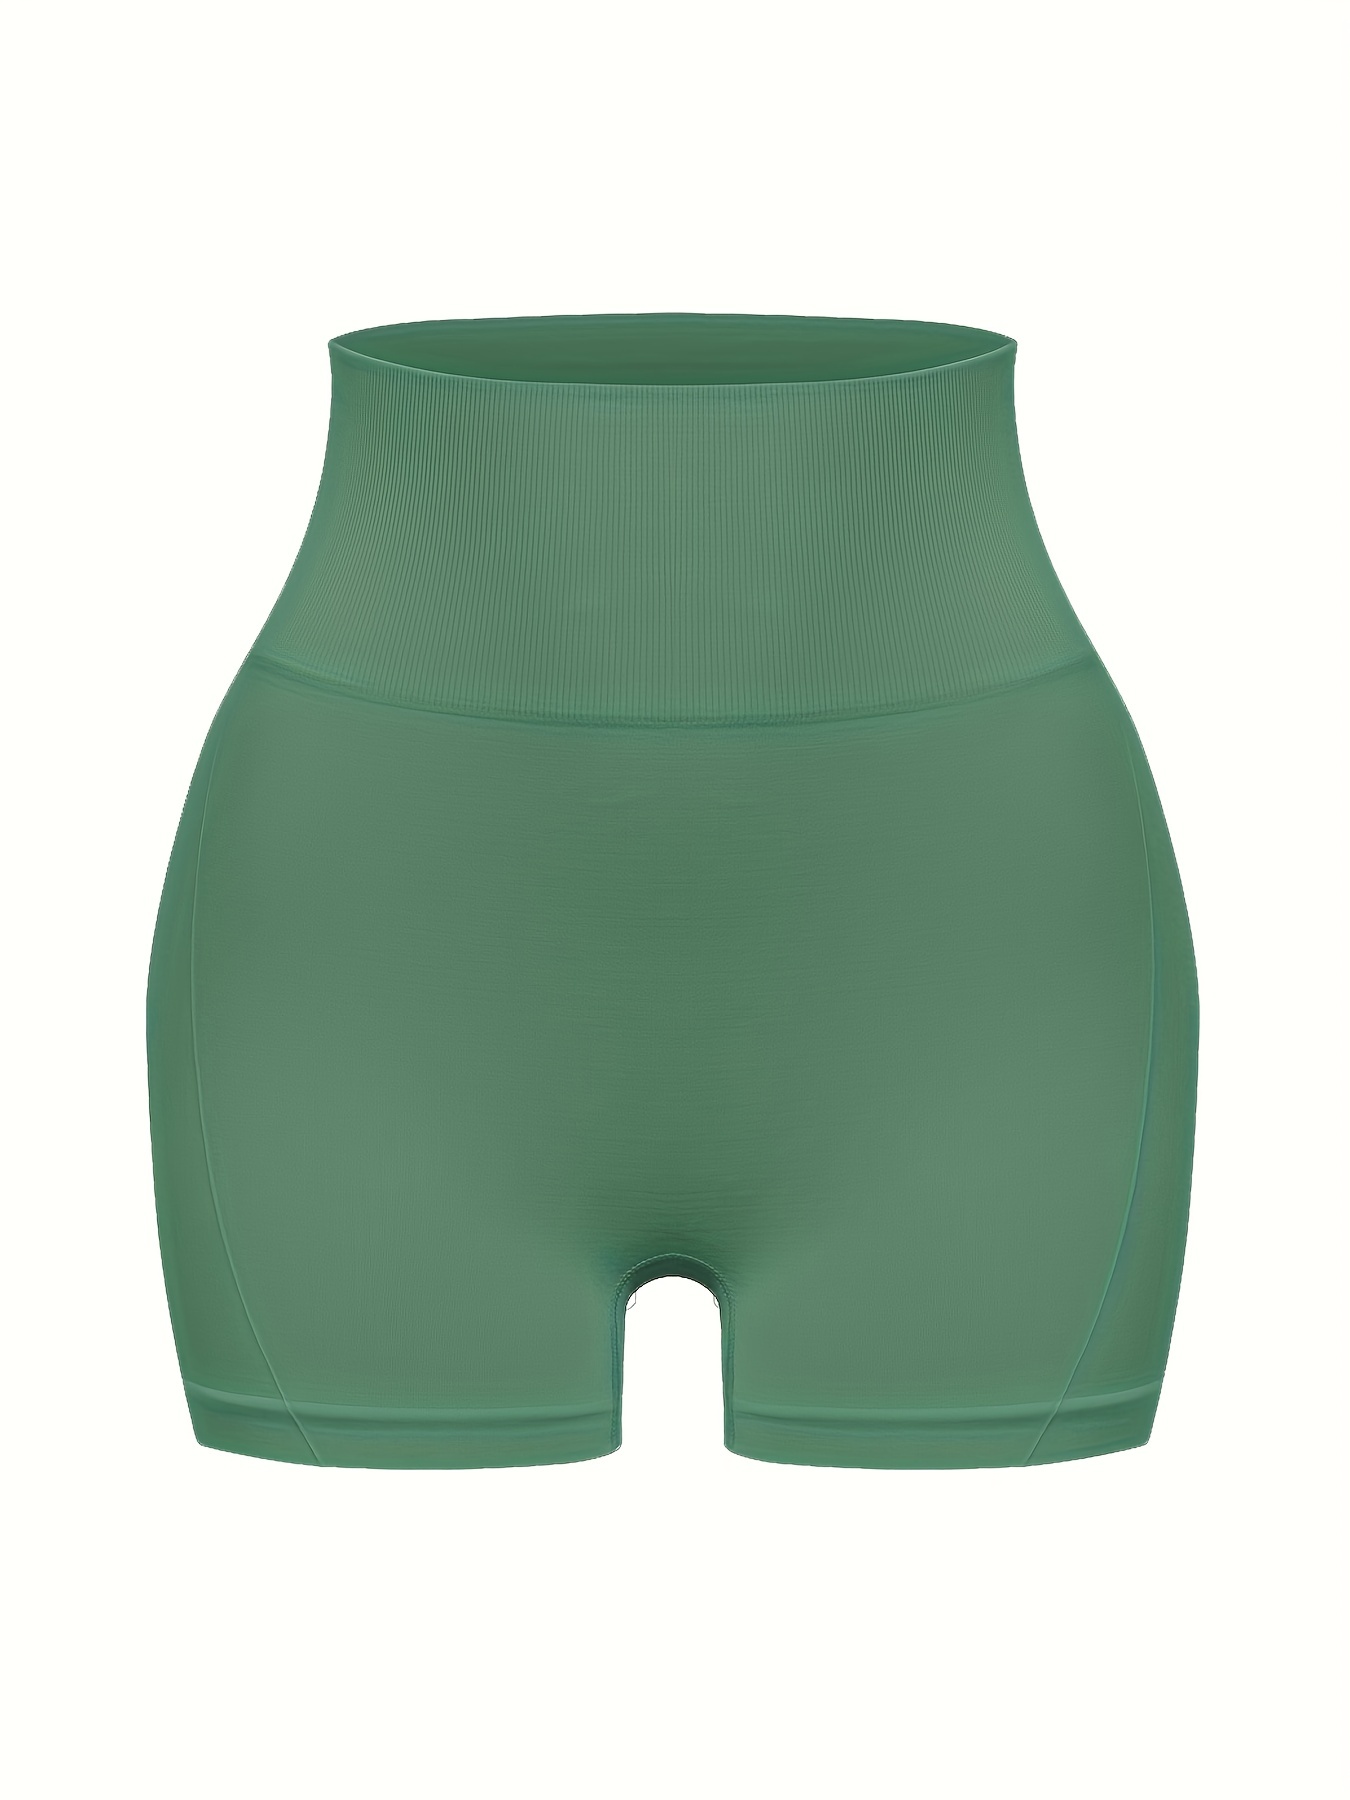 Green High Waisted Shorts for Women